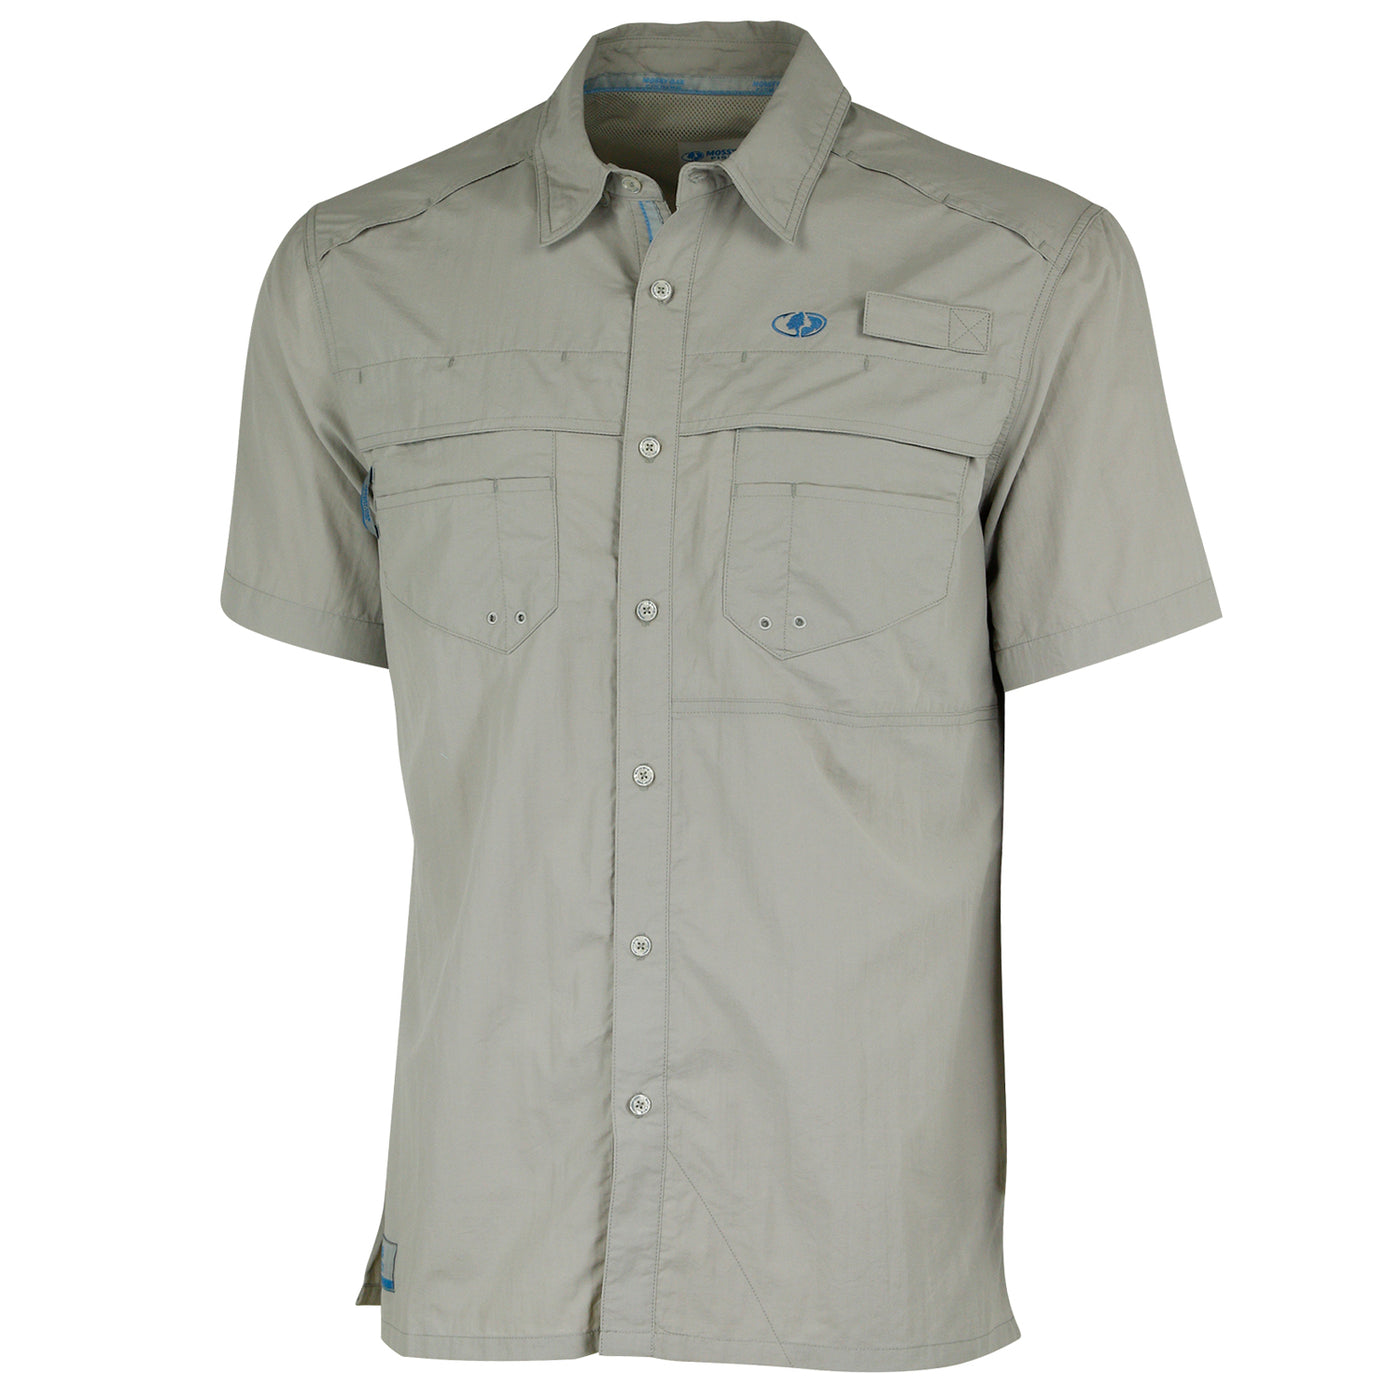 Mossy Oak Men's Short Sleeve Fishing Shirt Cool Grey Front